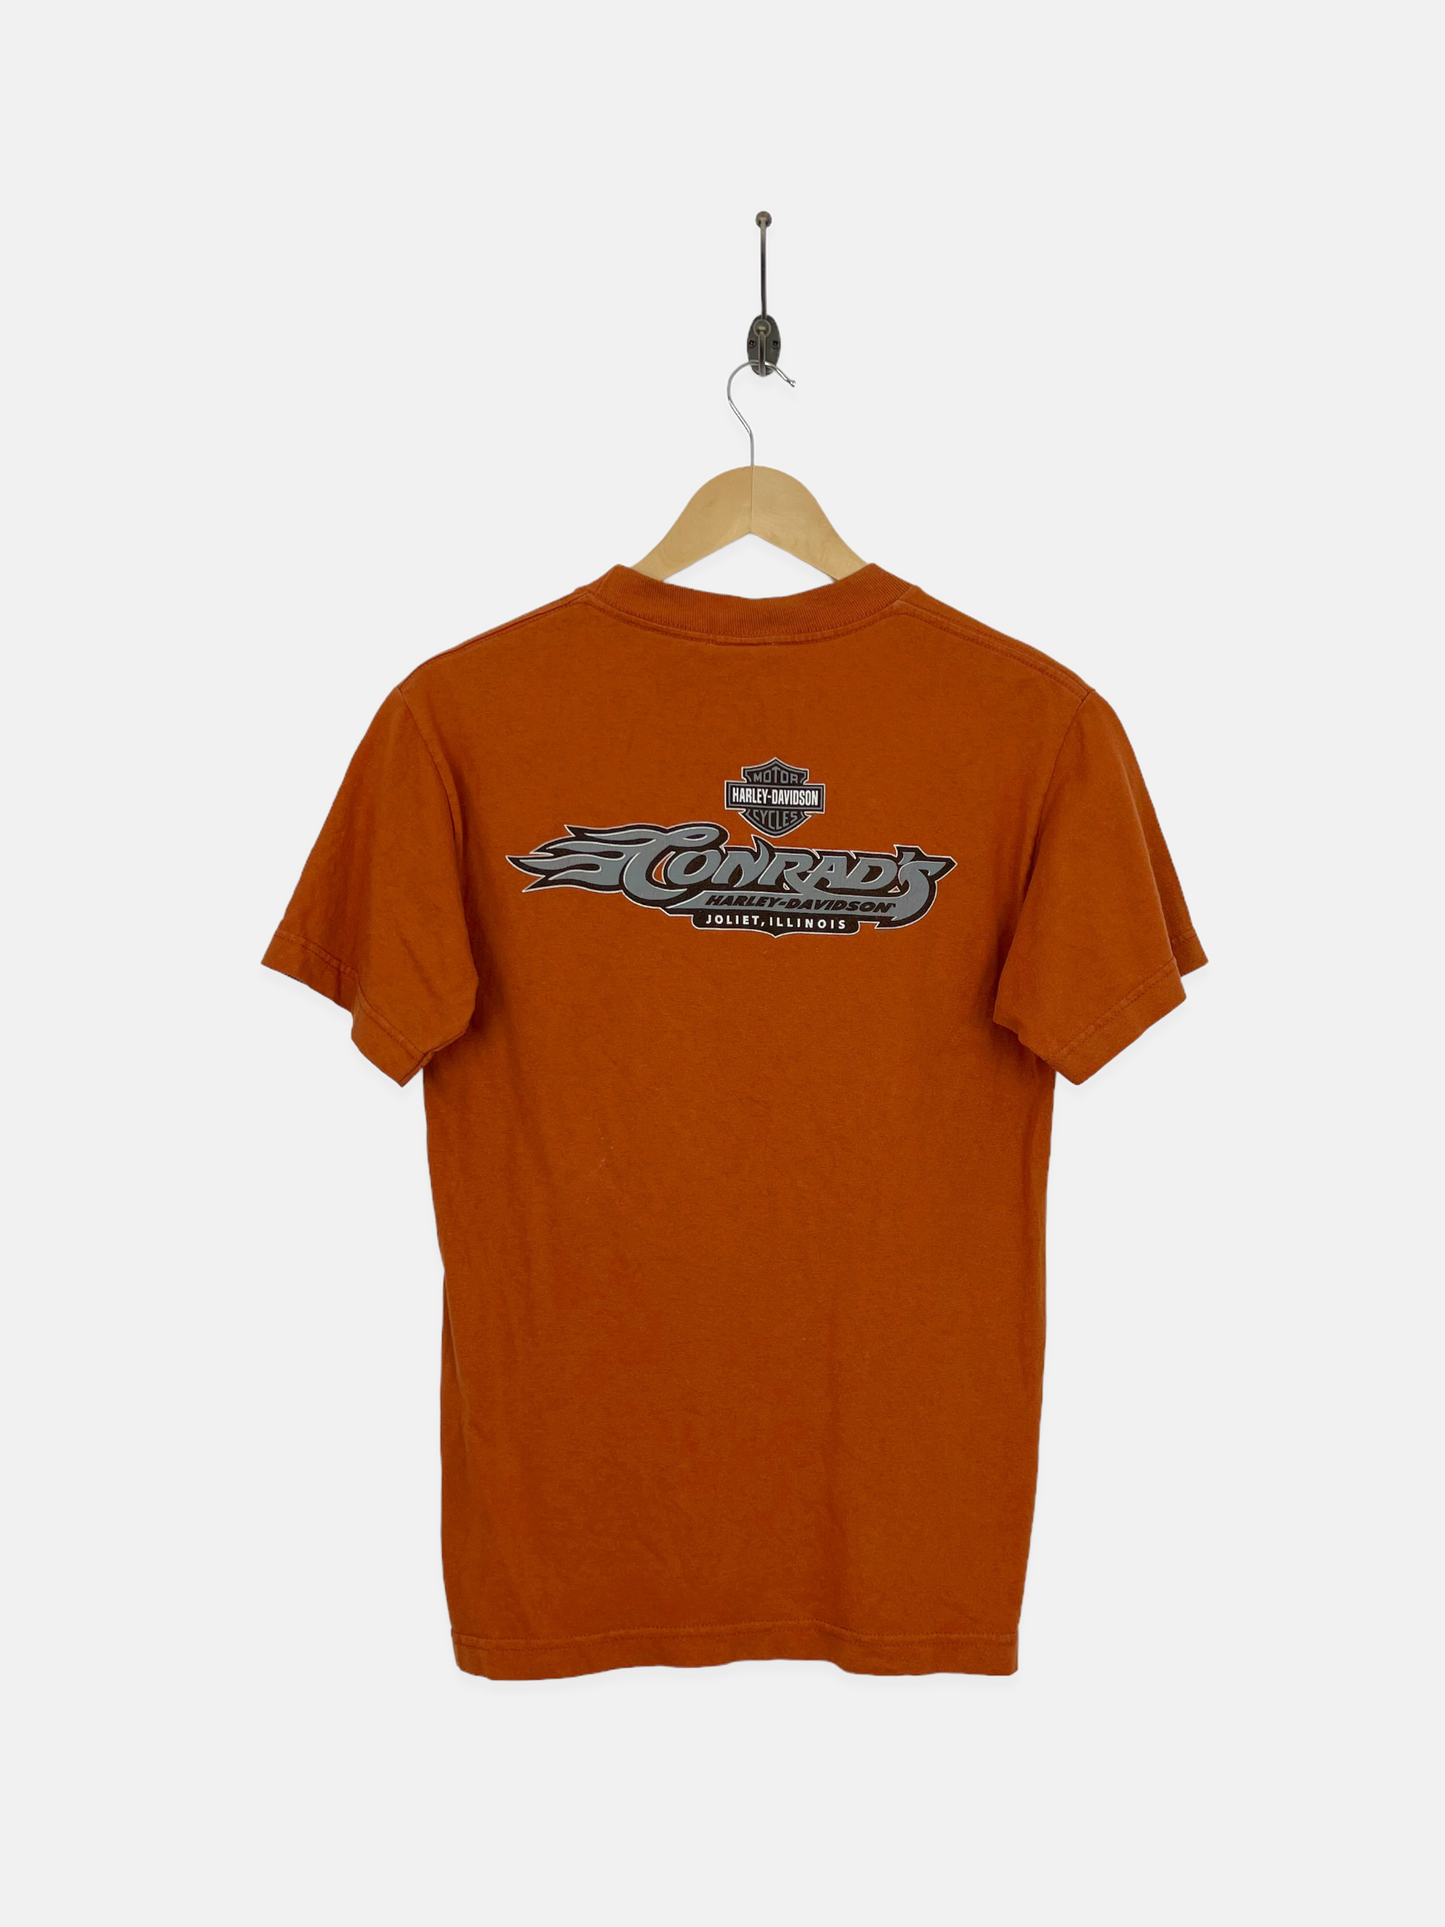 90's Harley Davidson Illinois Vintage T-Shirt Size 6-8